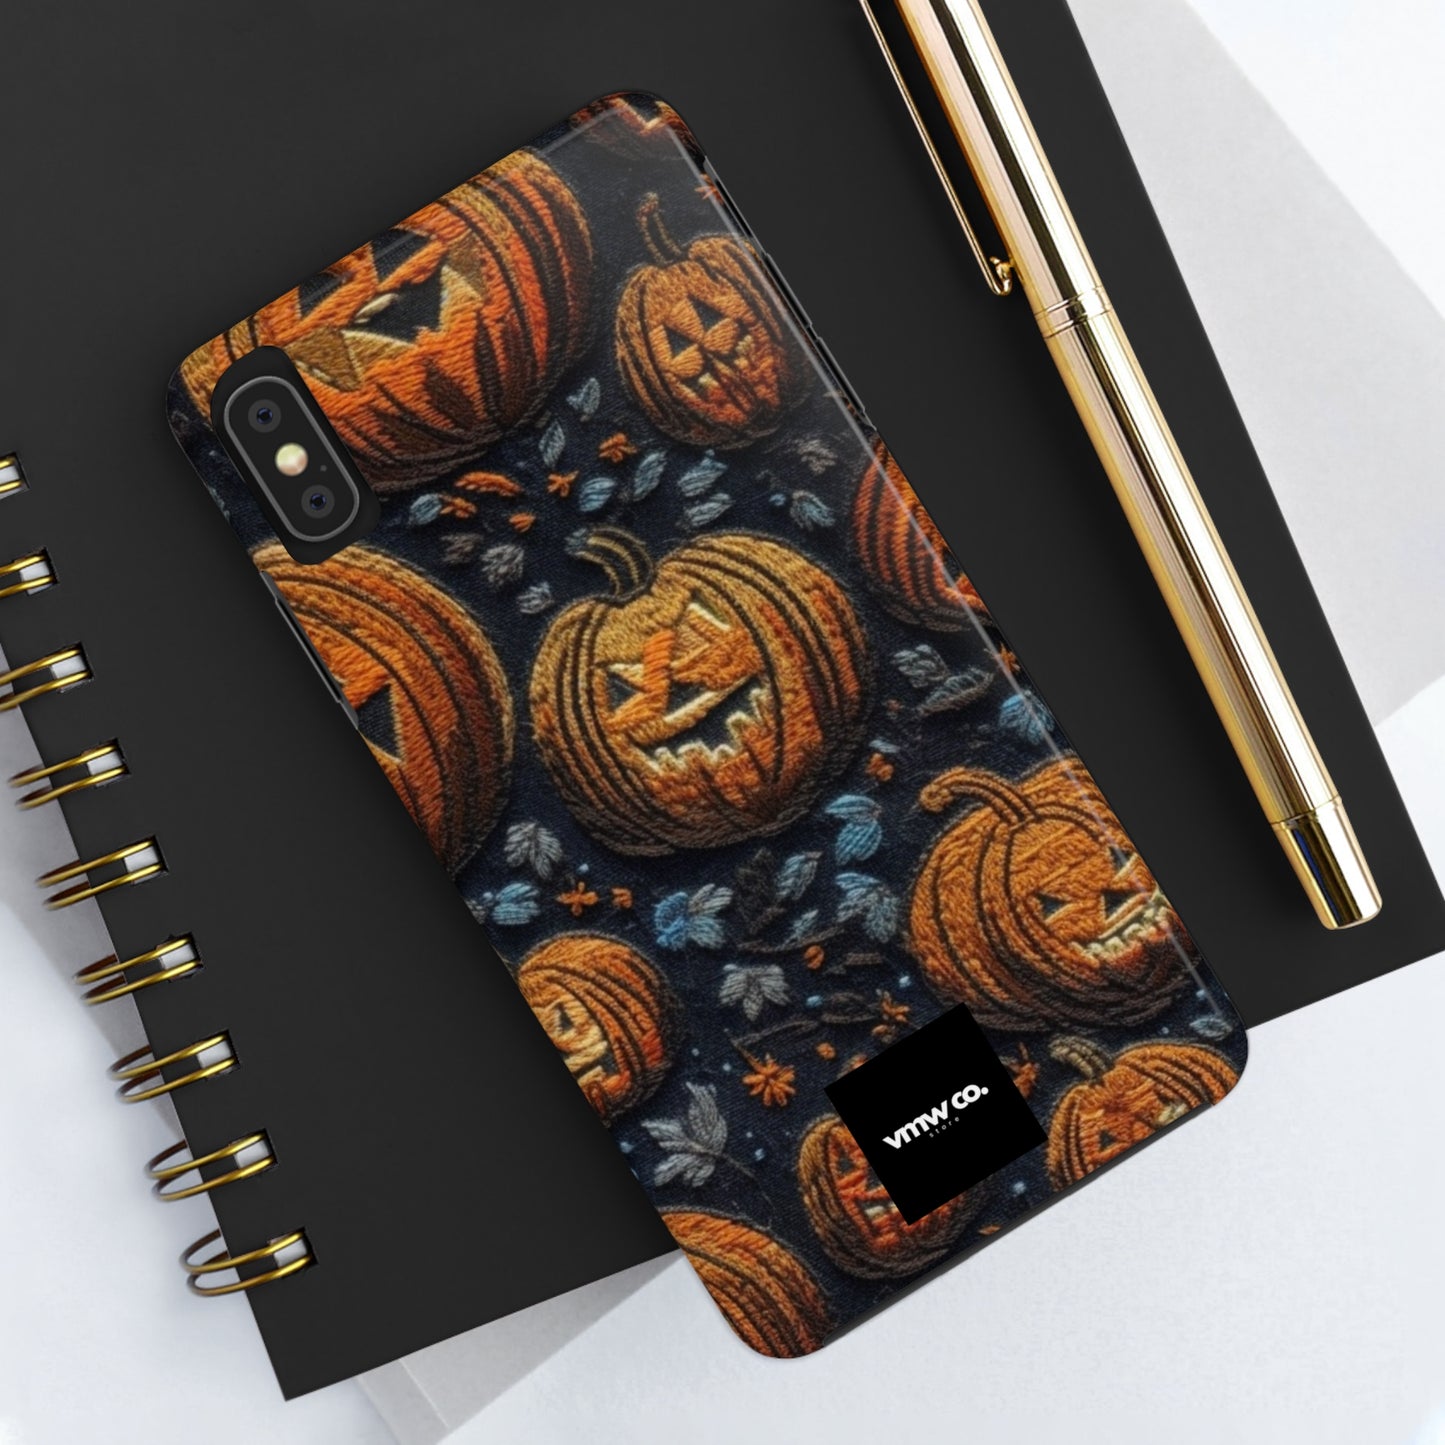 Halloween Pumpkin iPhone Tough Phone Cases